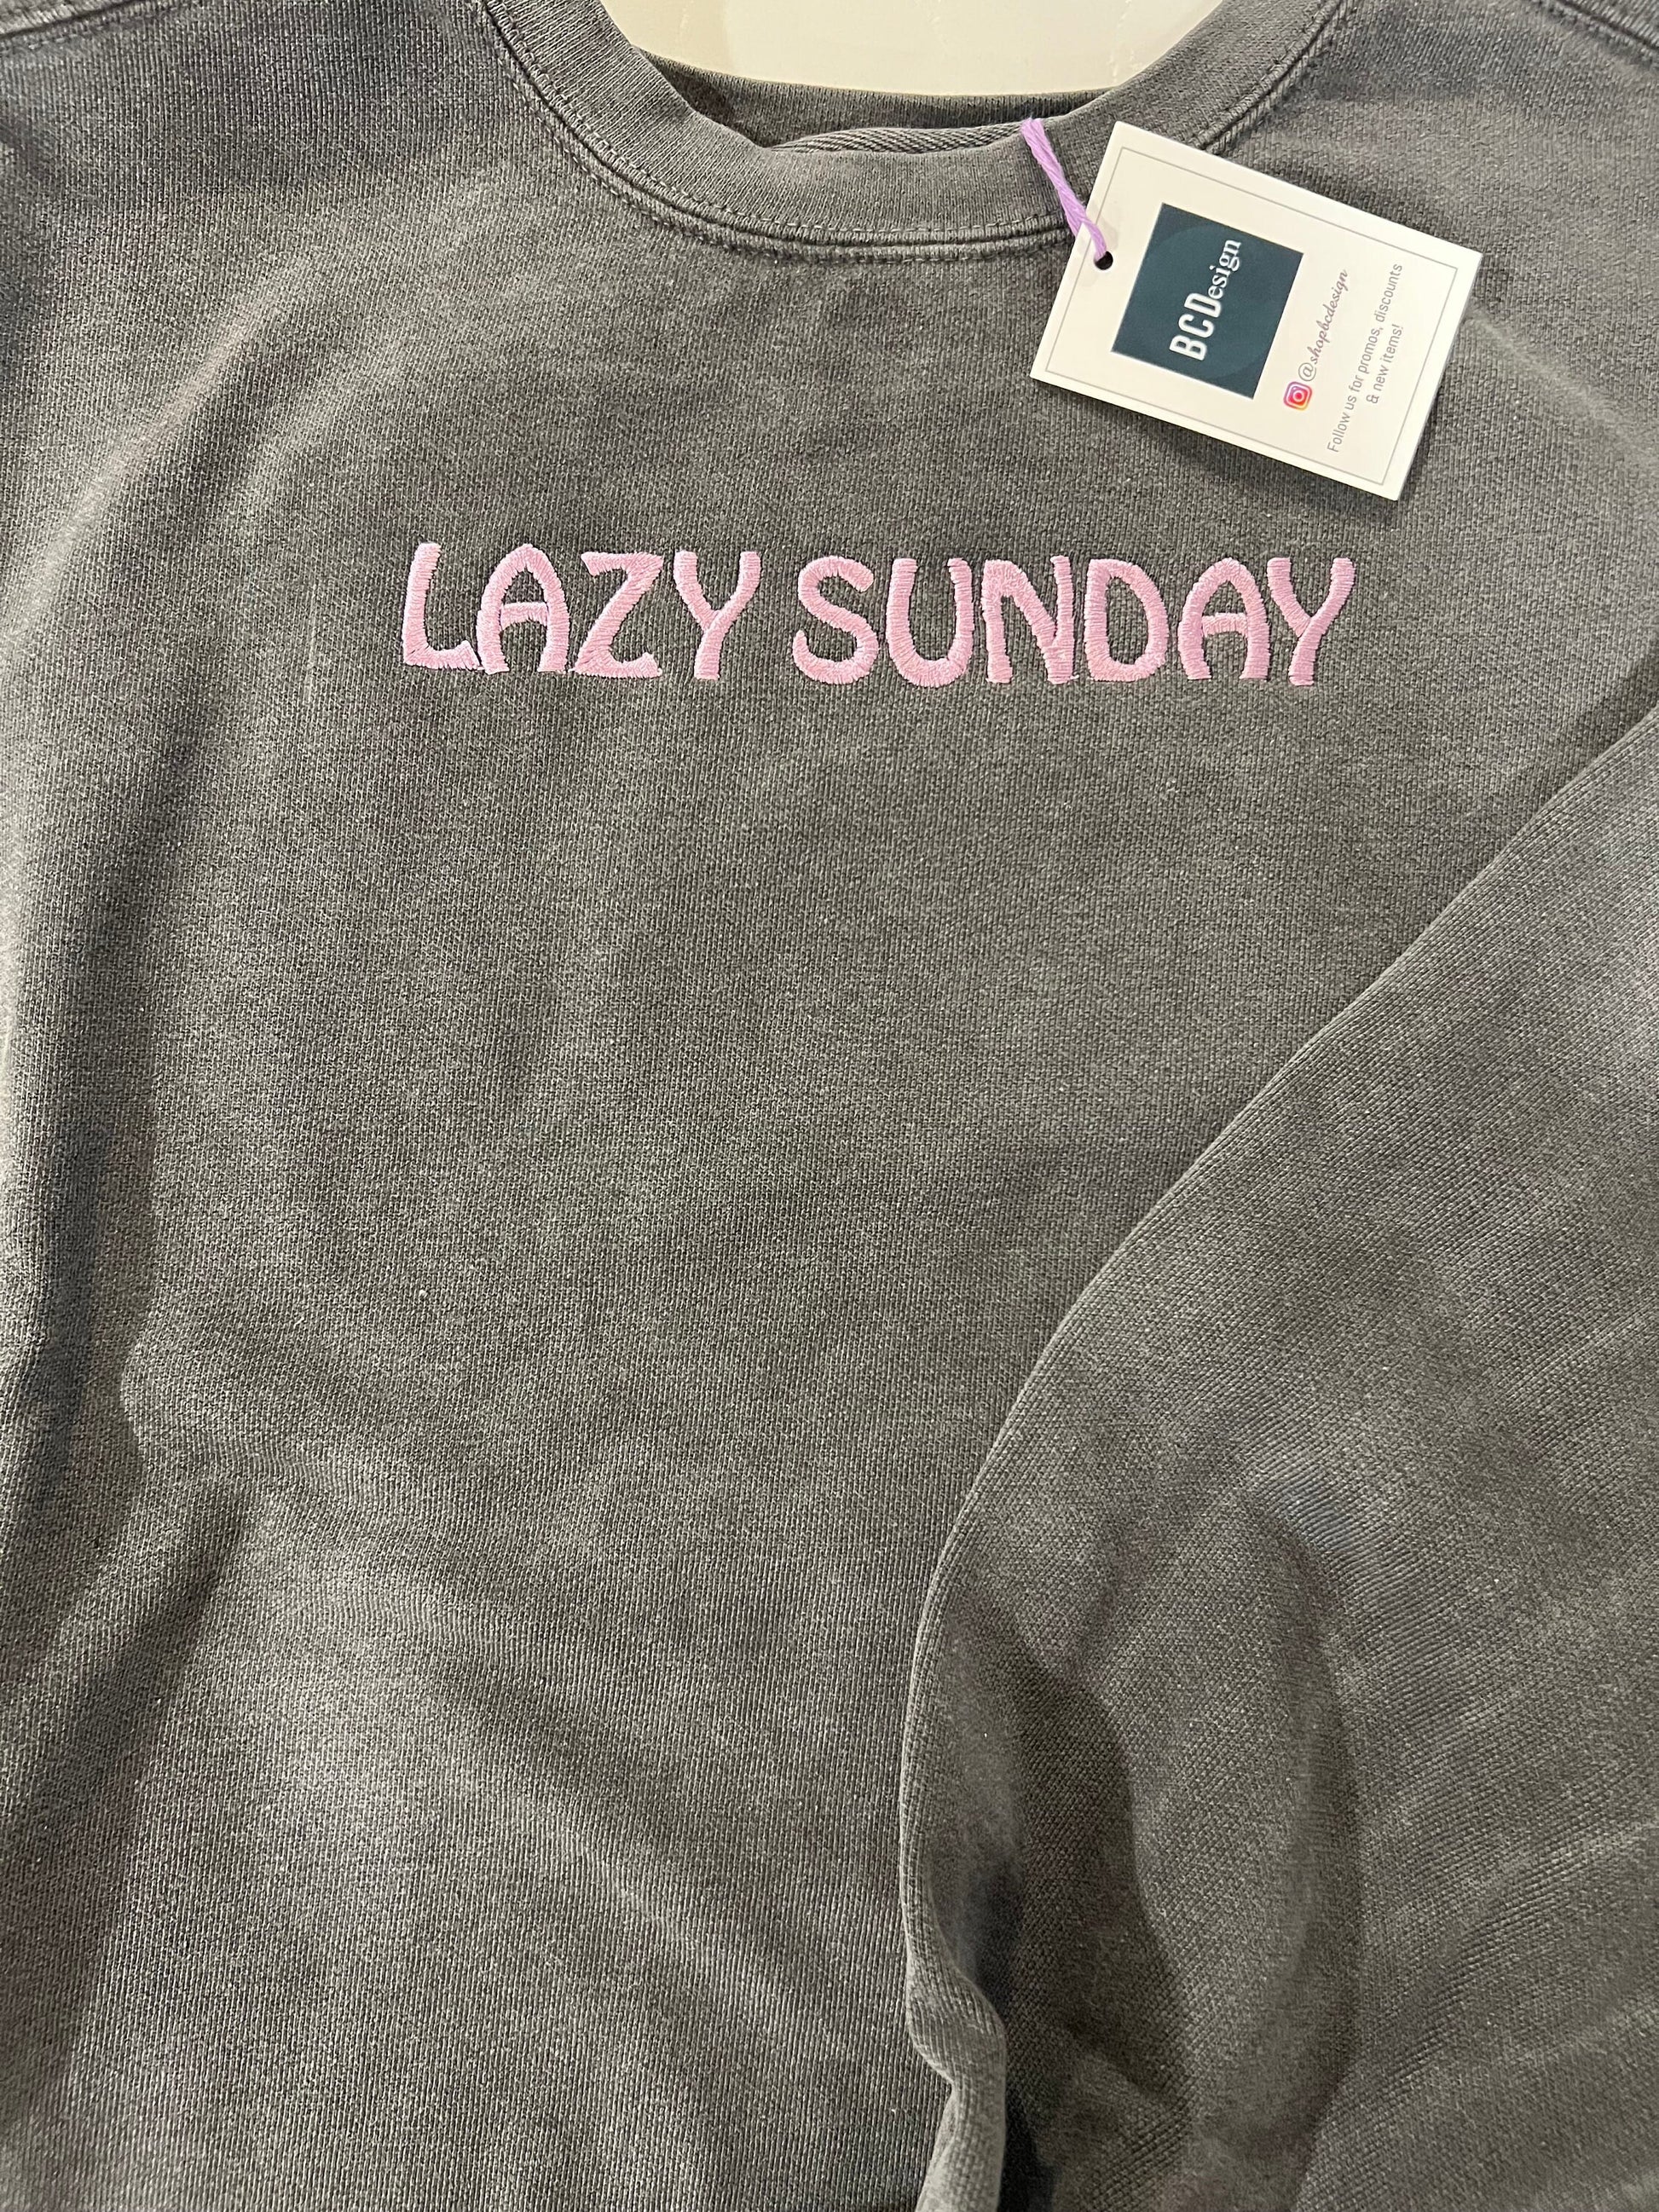 Lazy Sunday Sweatshirt Comfy Crewneck Football Season Premium Sweatshirt College